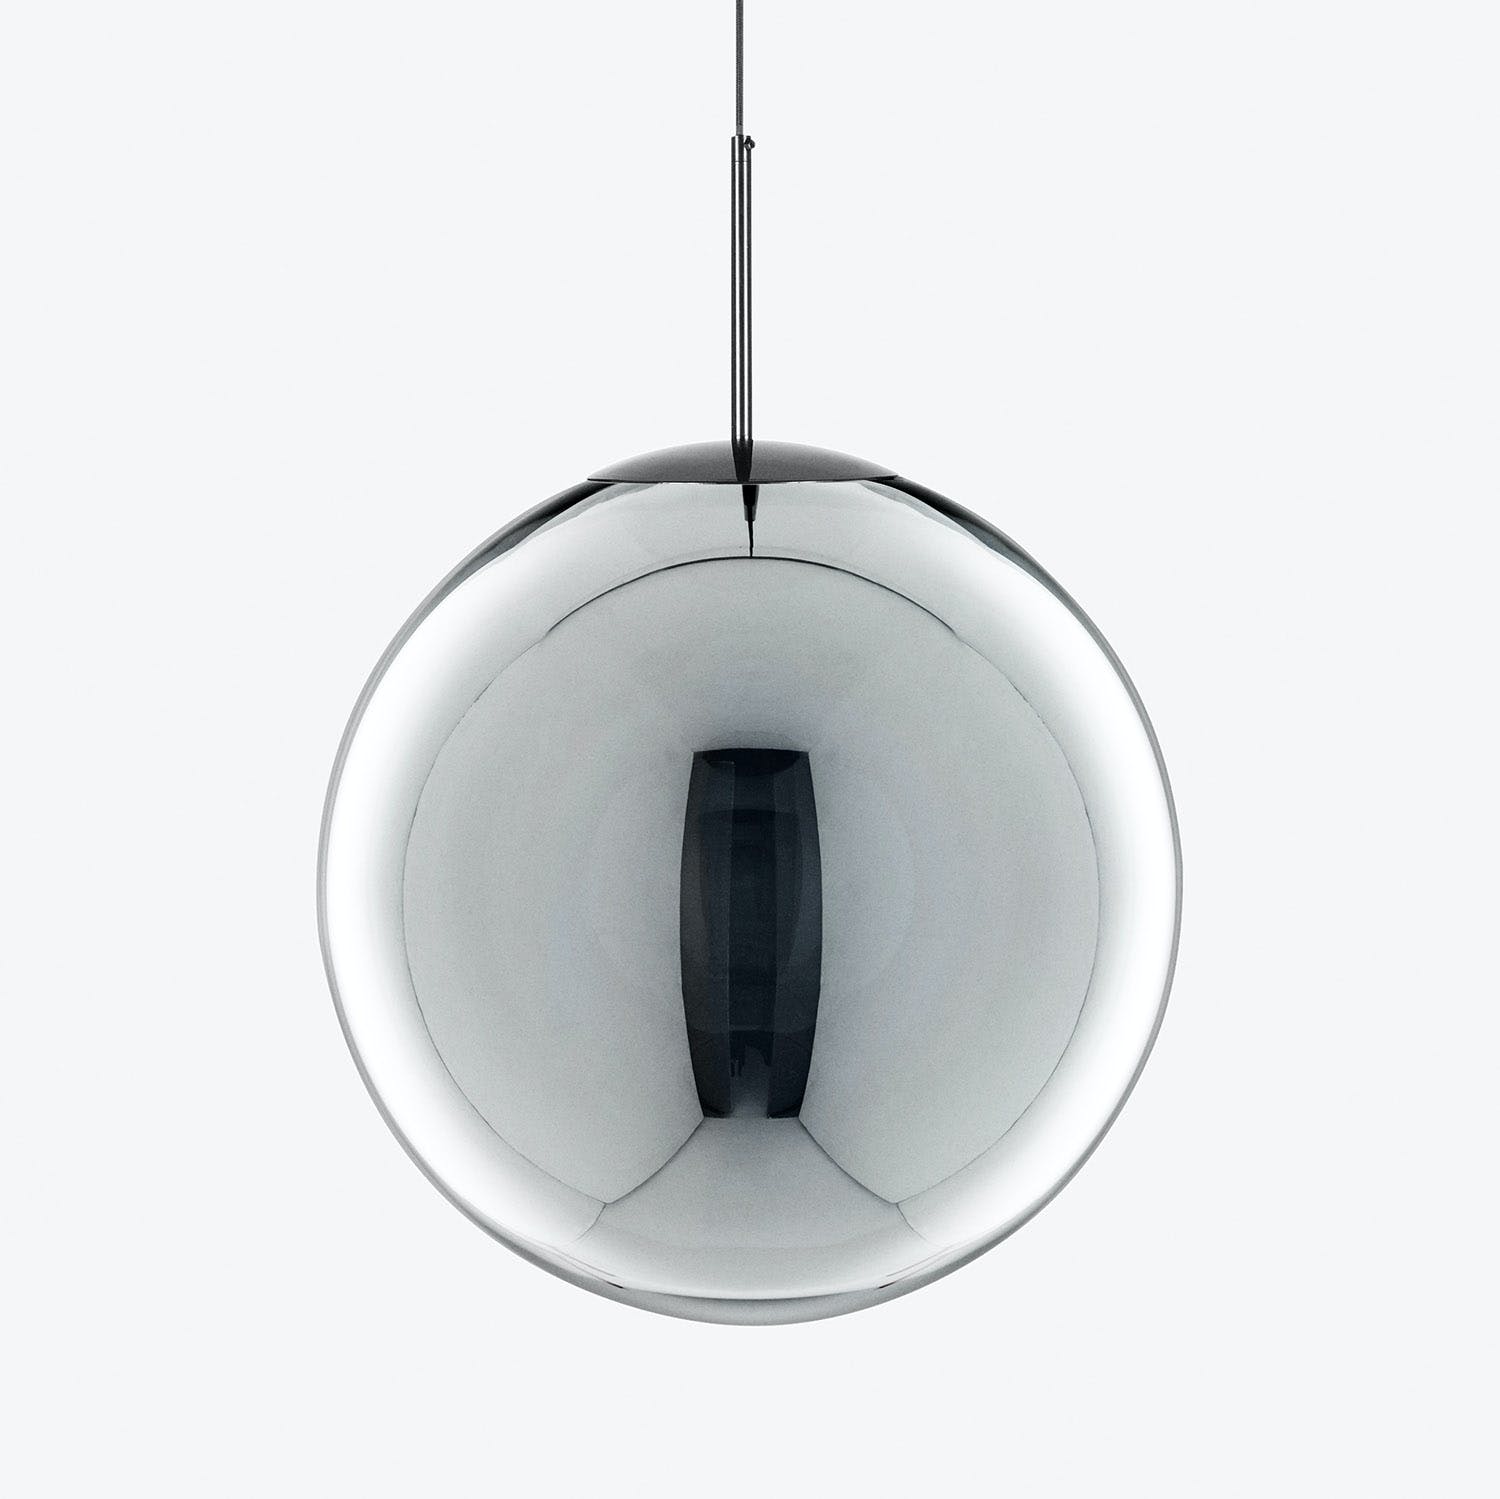 Sleek and modern pendant light fixture with reflective metallic surface.